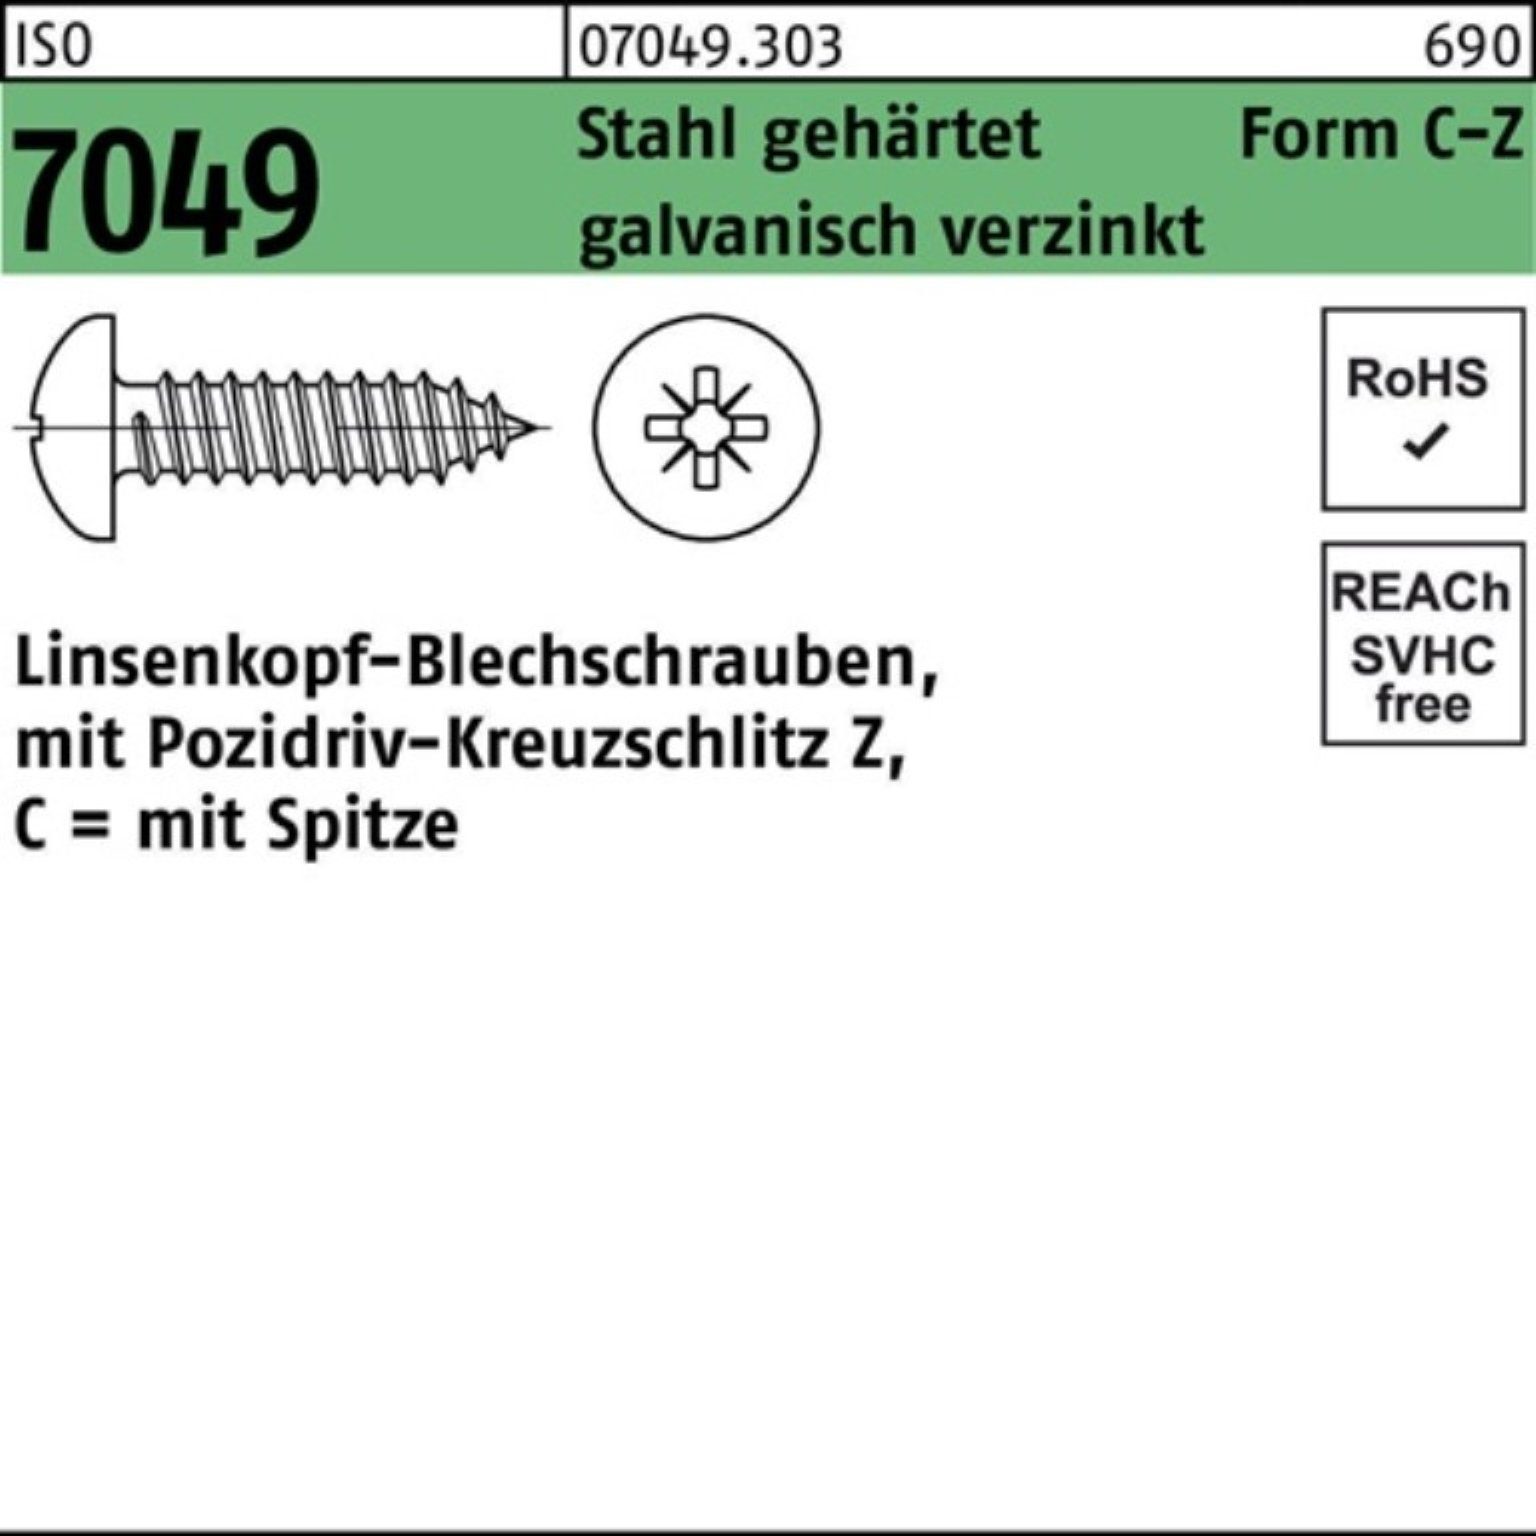 Reyher ge Stahl Pack 7049 ISO -C-Z Spitze/PZ 250er Blechschraube LIKO 38 6,3x Blechschraube